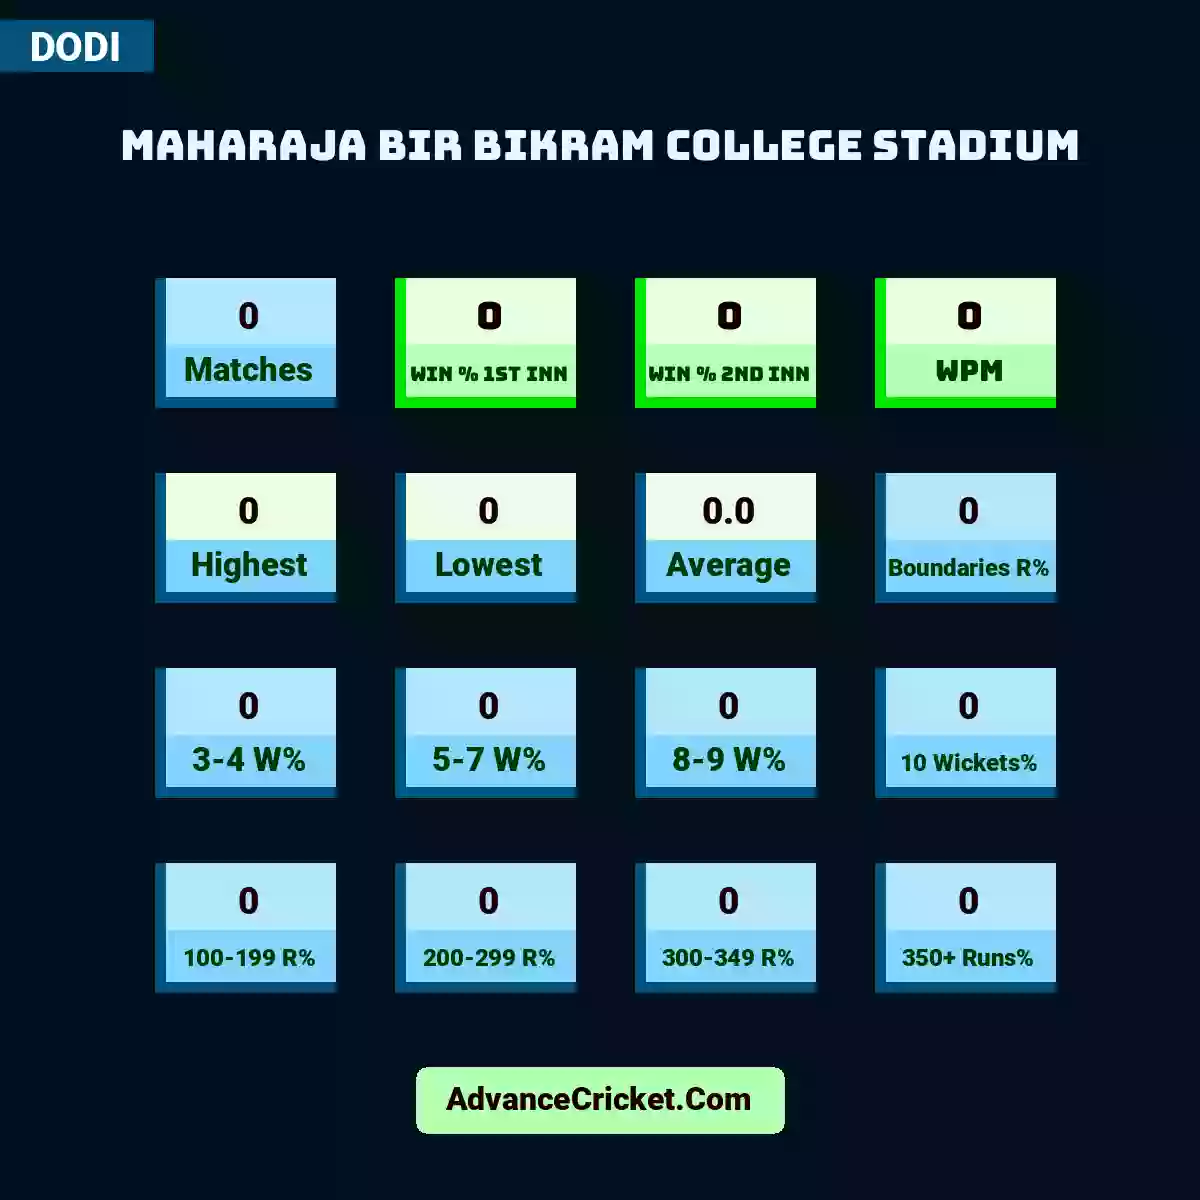 Image showing Maharaja Bir Bikram College Stadium with Matches: 0, Win % 1st Inn: 0, Win % 2nd Inn: 0, WPM: 0, Highest: 0, Lowest: 0, Average: 0.0, Boundaries R%: 0, 3-4 W%: 0, 5-7 W%: 0, 8-9 W%: 0, 10 Wickets%: 0, 100-199 R%: 0, 200-299 R%: 0, 300-349 R%: 0, 350+ Runs%: 0.